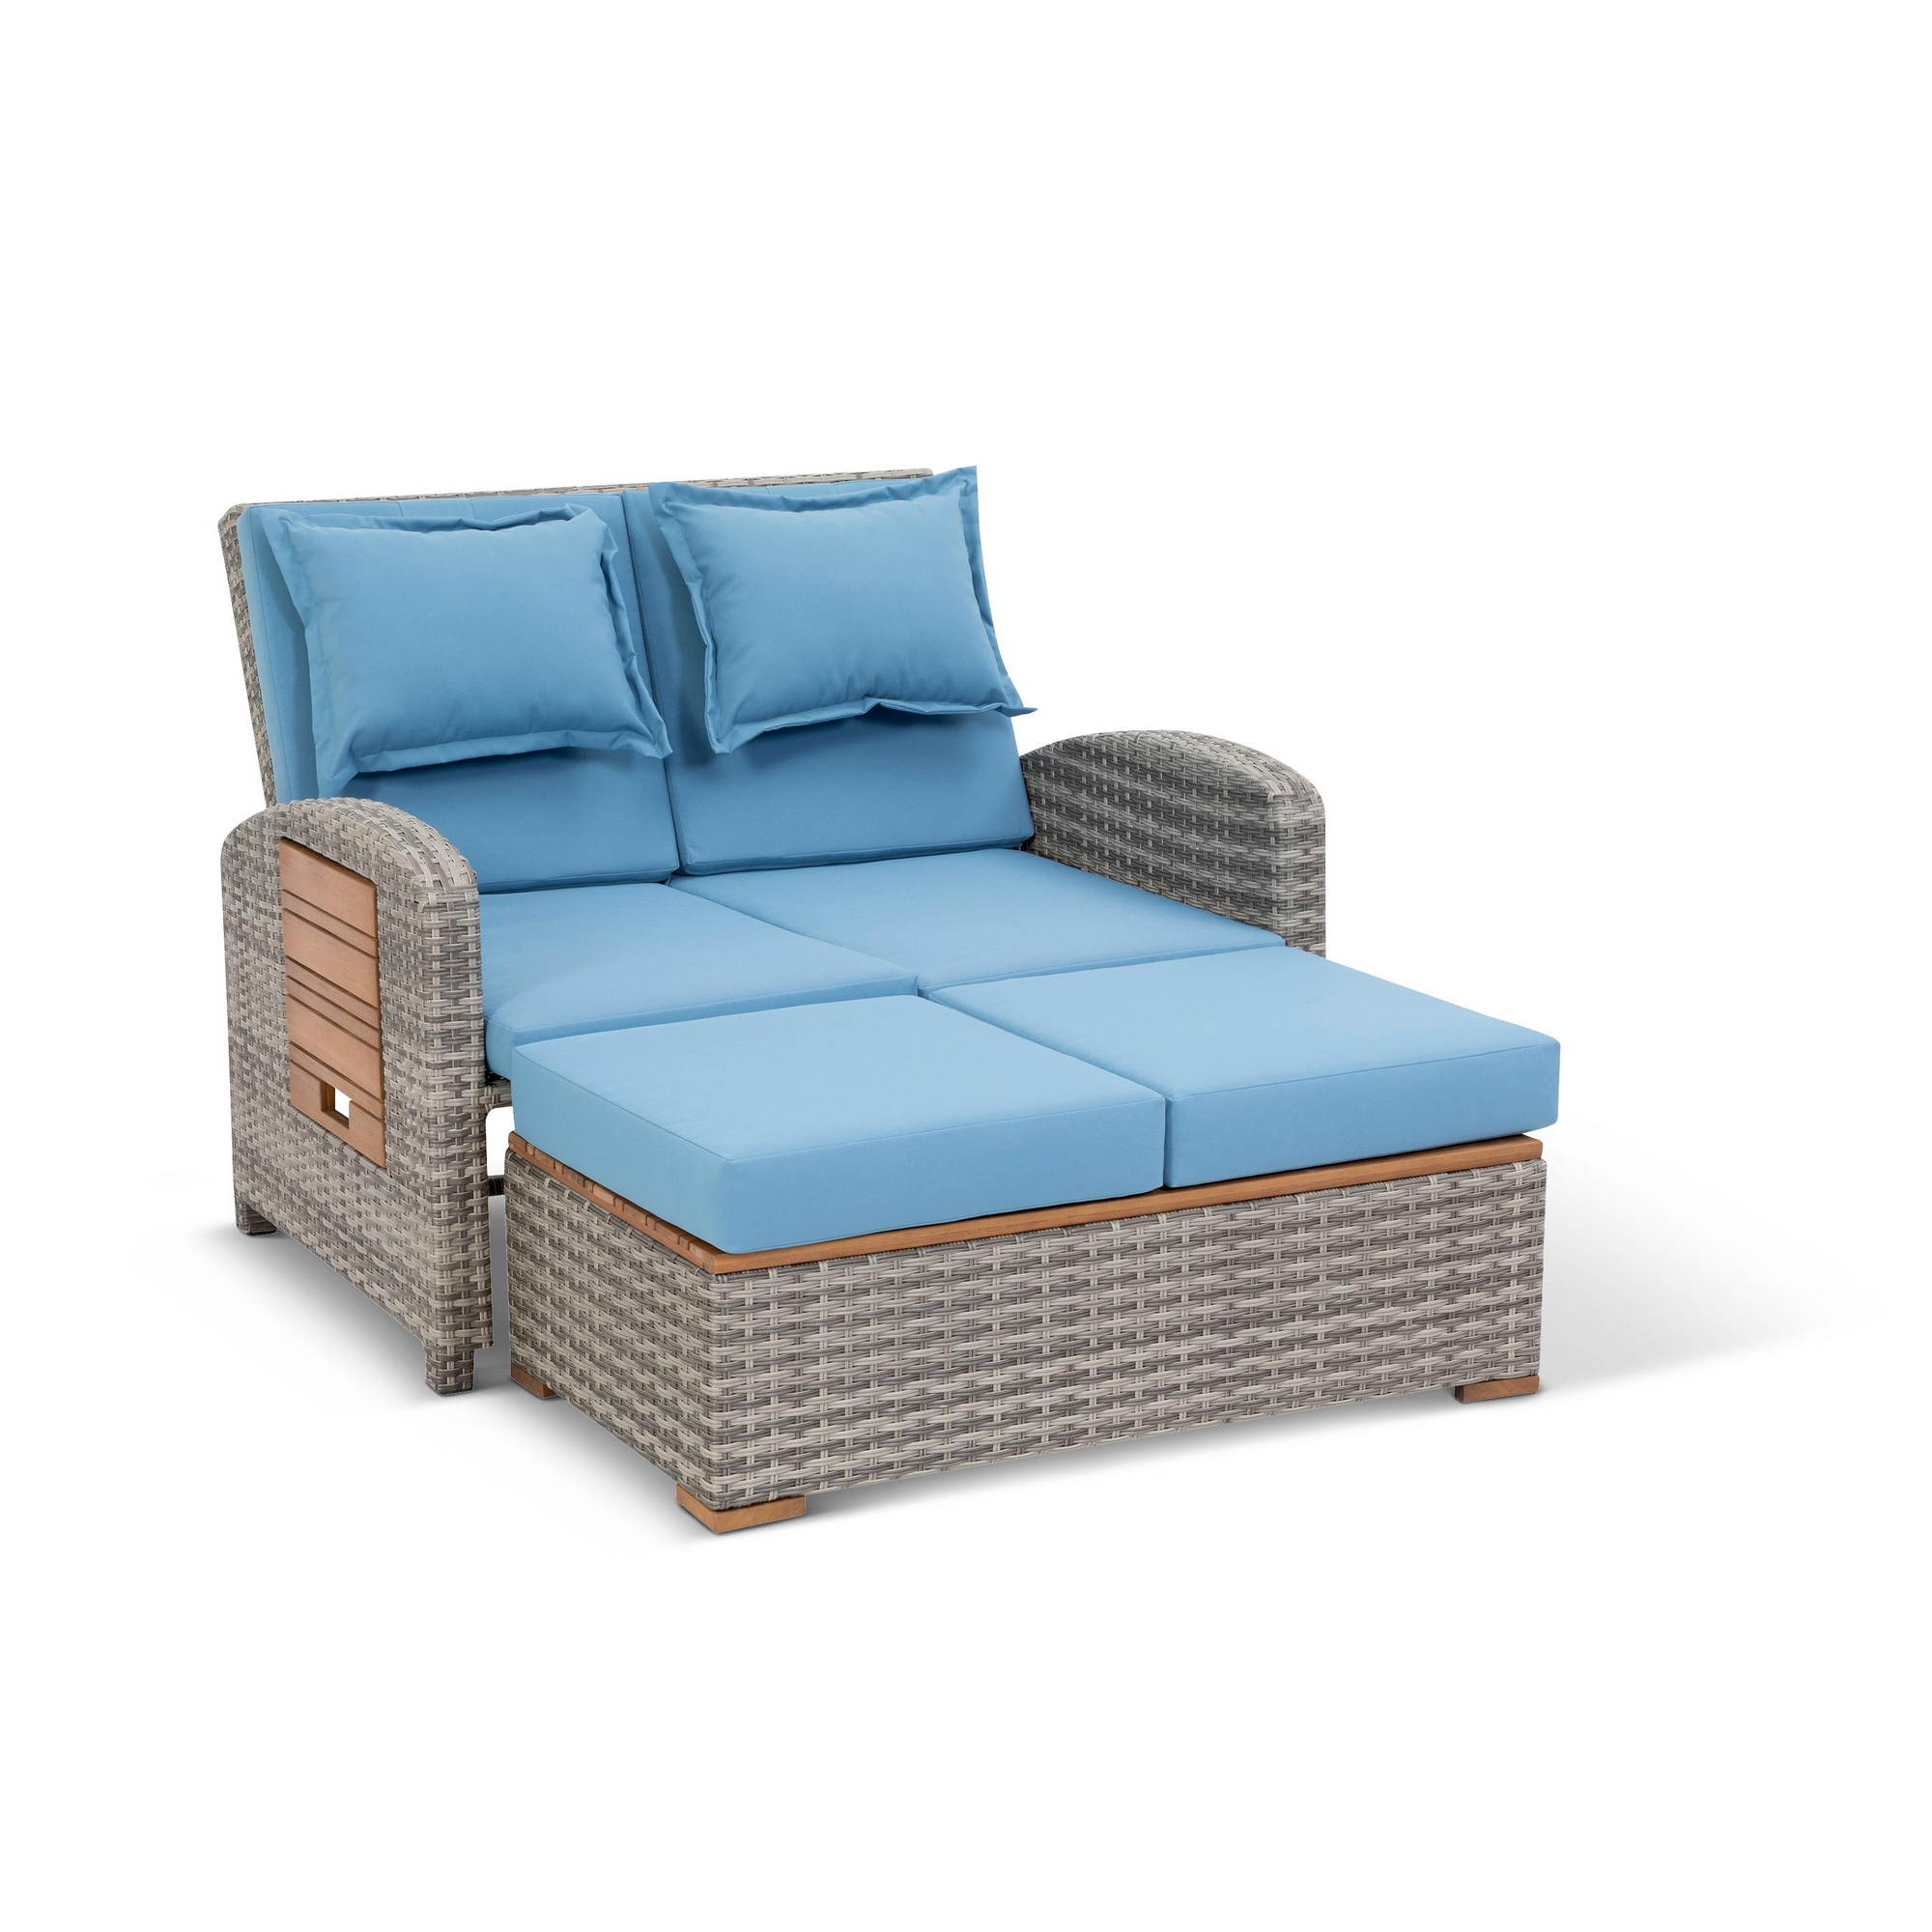 Multifunktions-Sofa 'Gesine' blau 117 x 93 cm + product picture